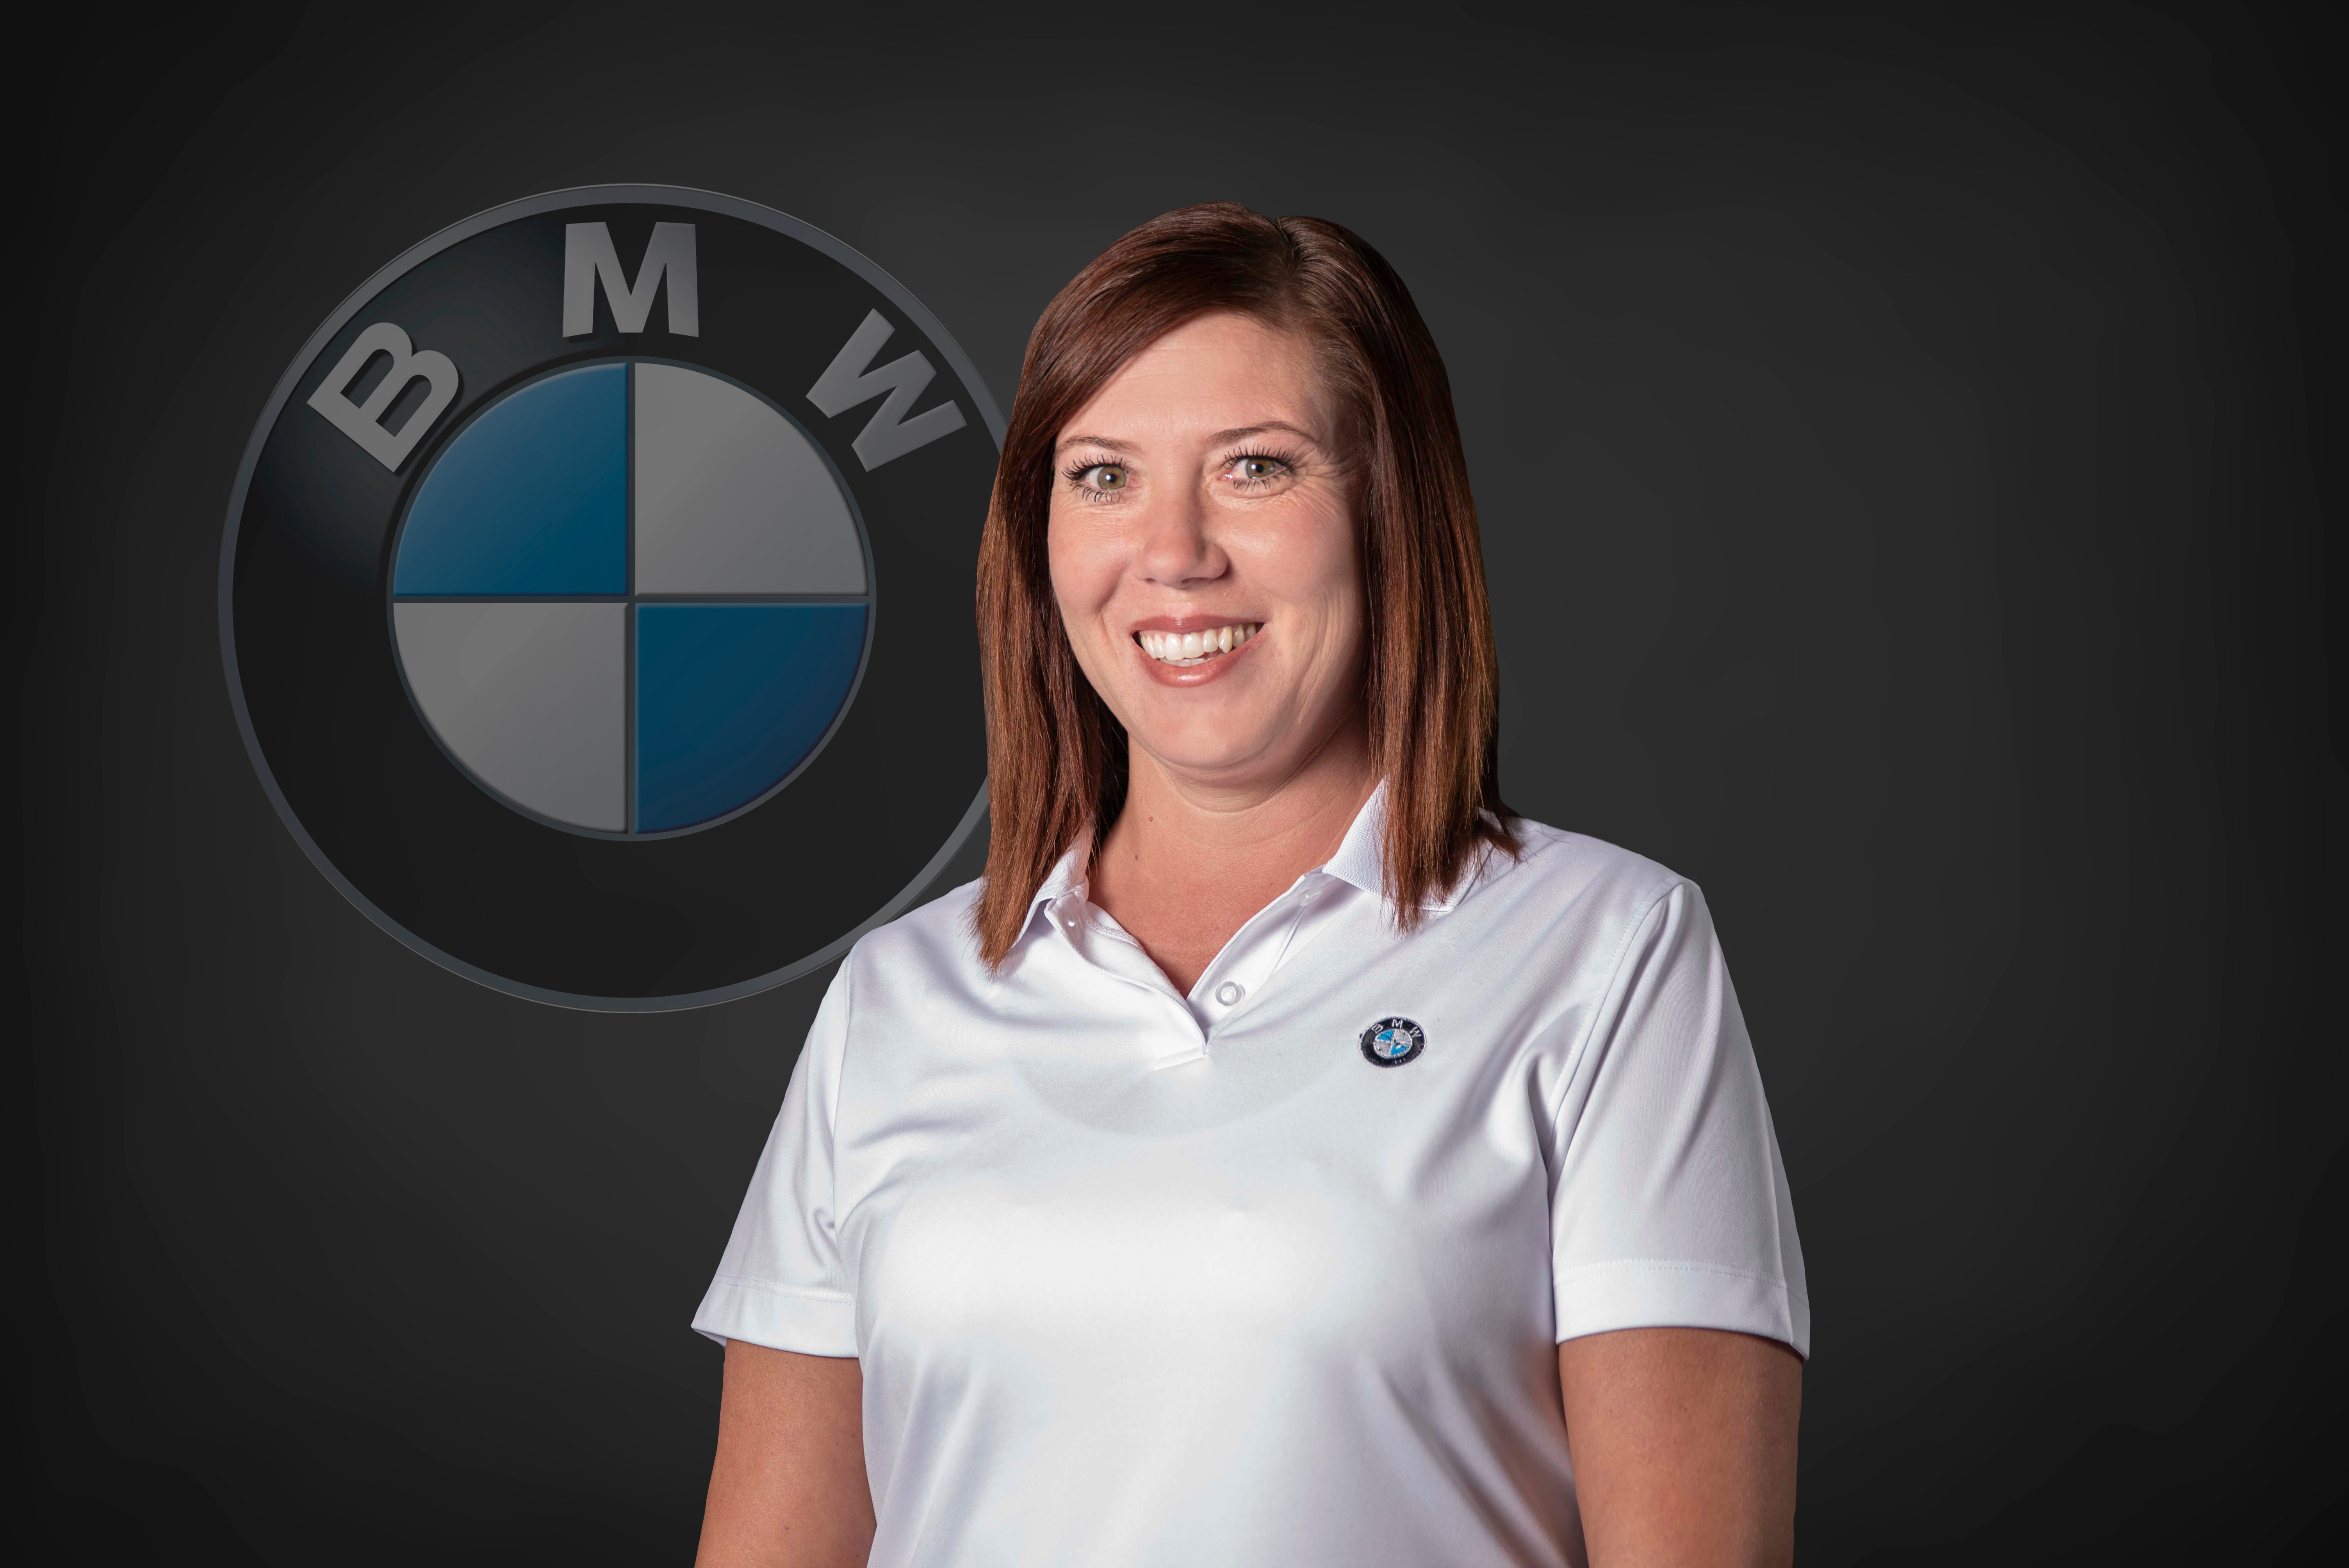 BMW Lease Loyalty Specialist